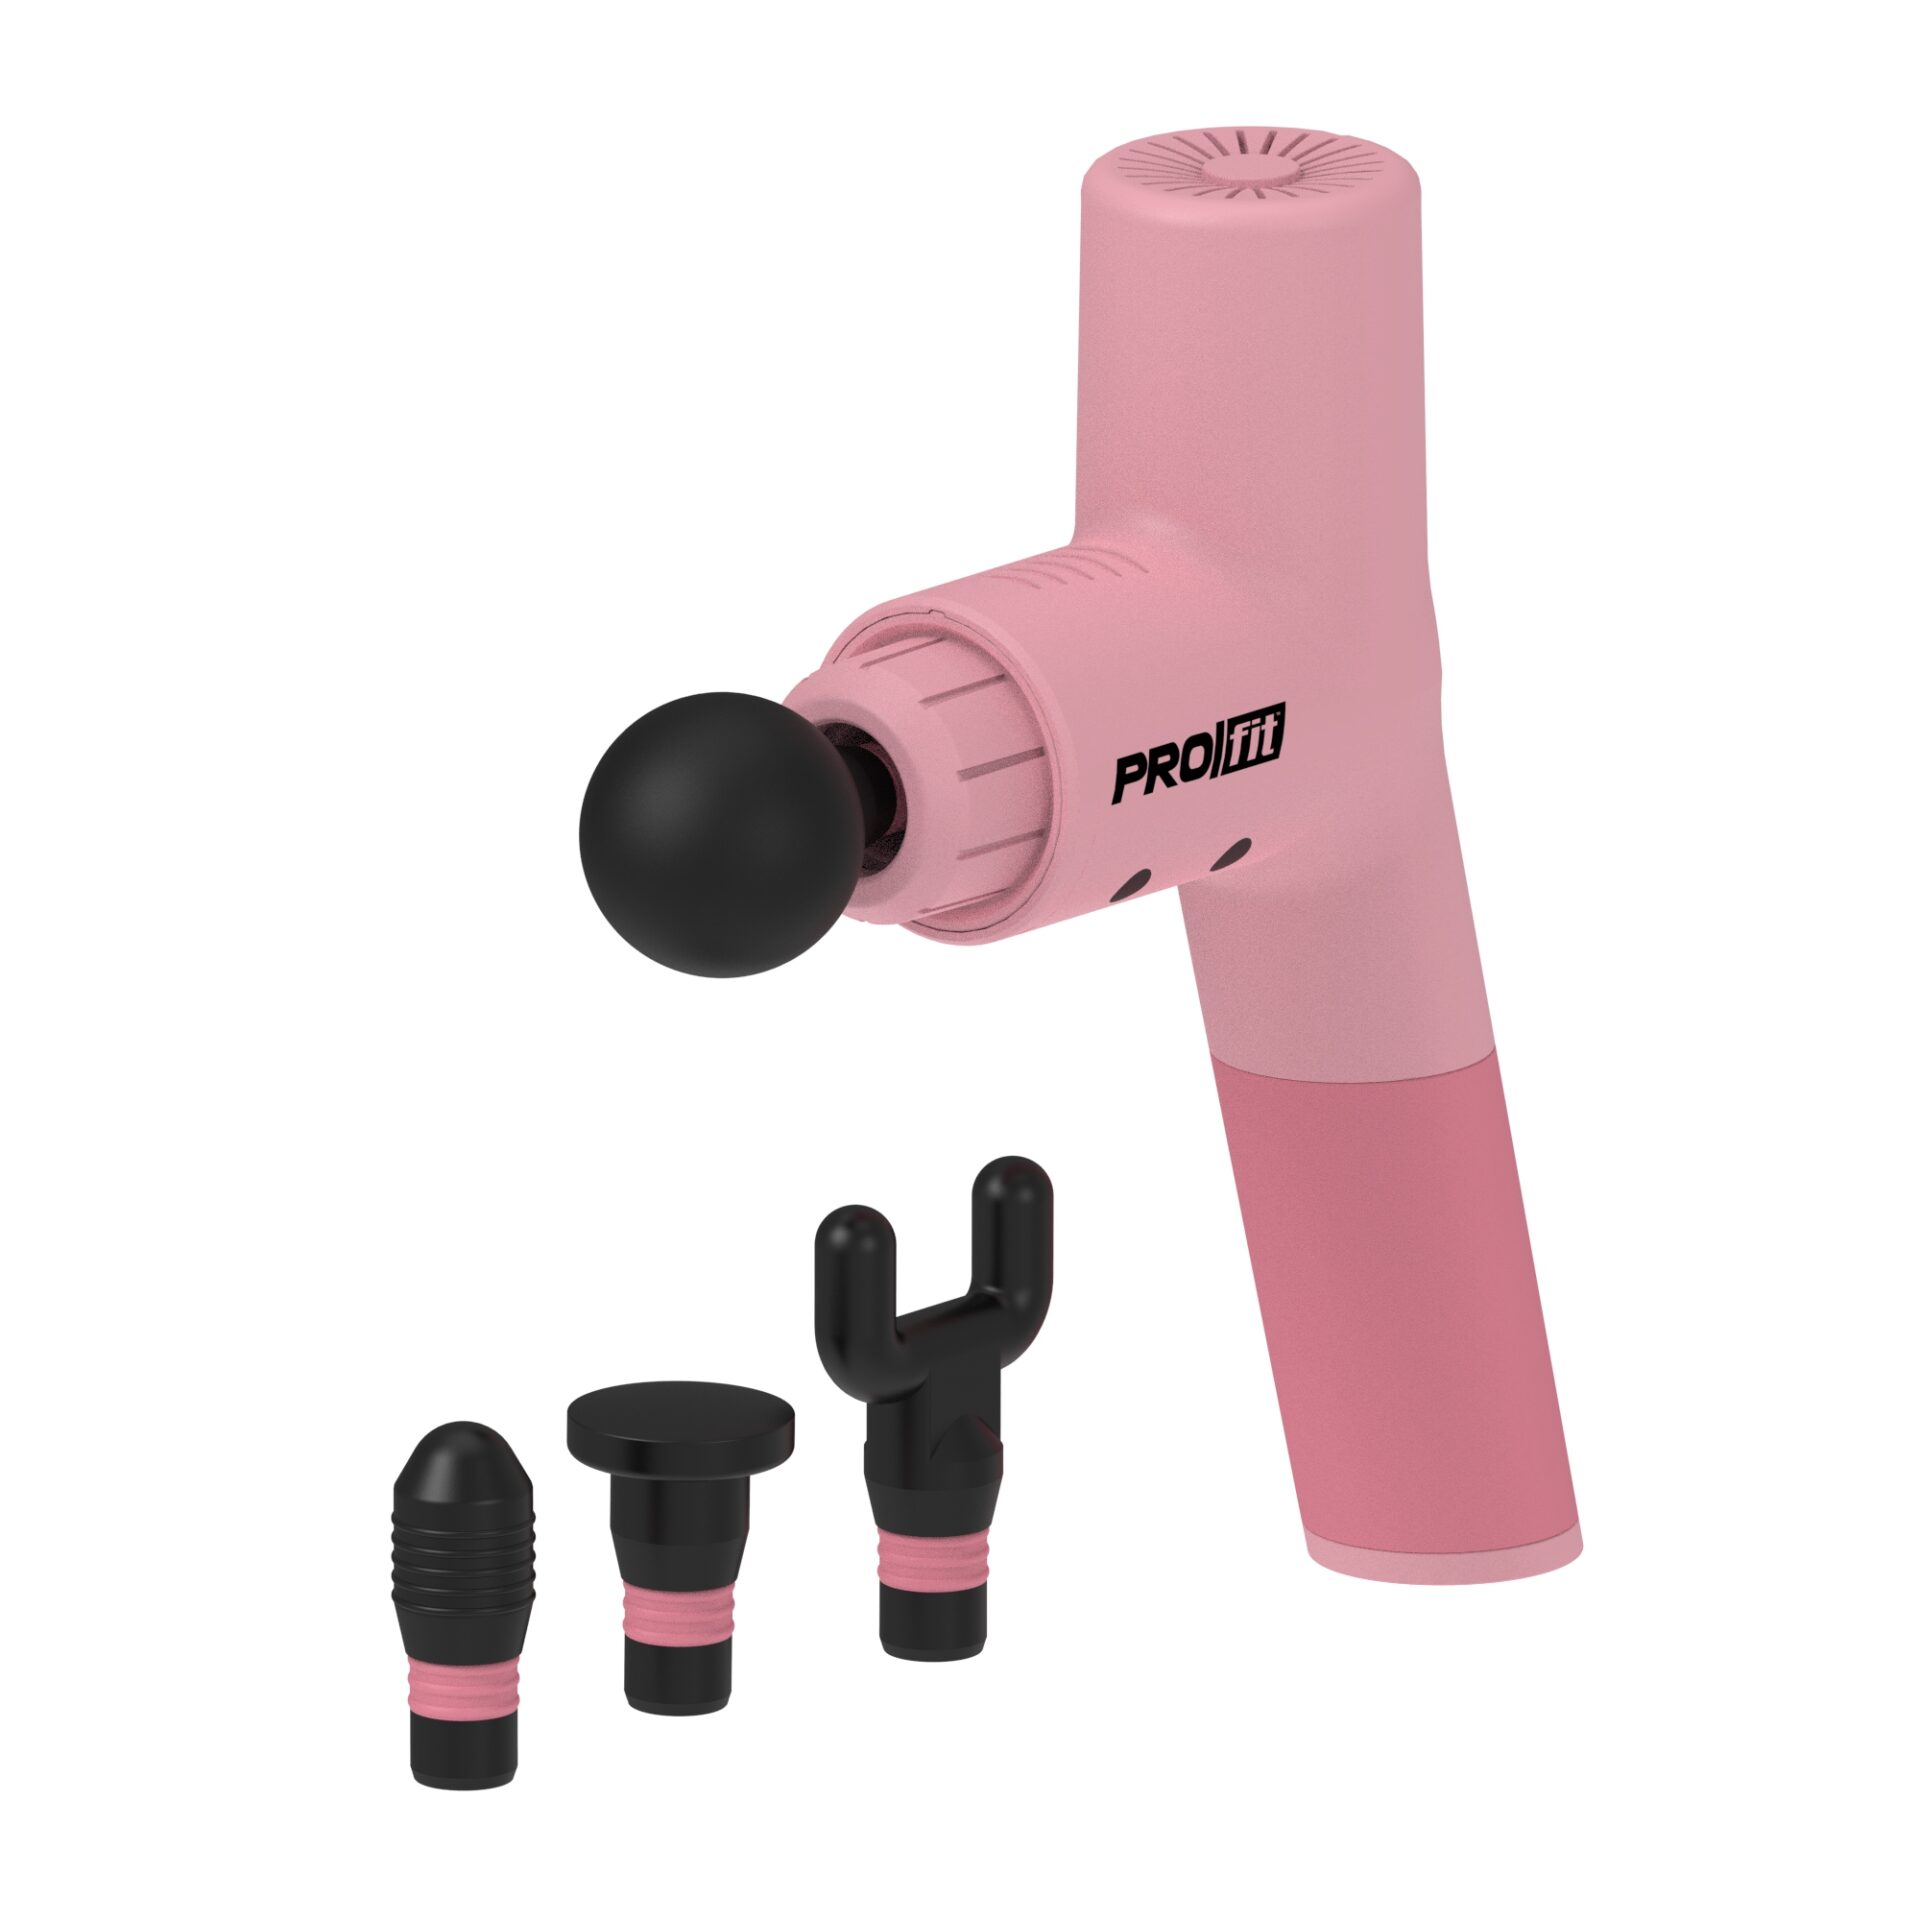 Comfier Massage Gun with Heat,Muscle Massge Gun for Athletes